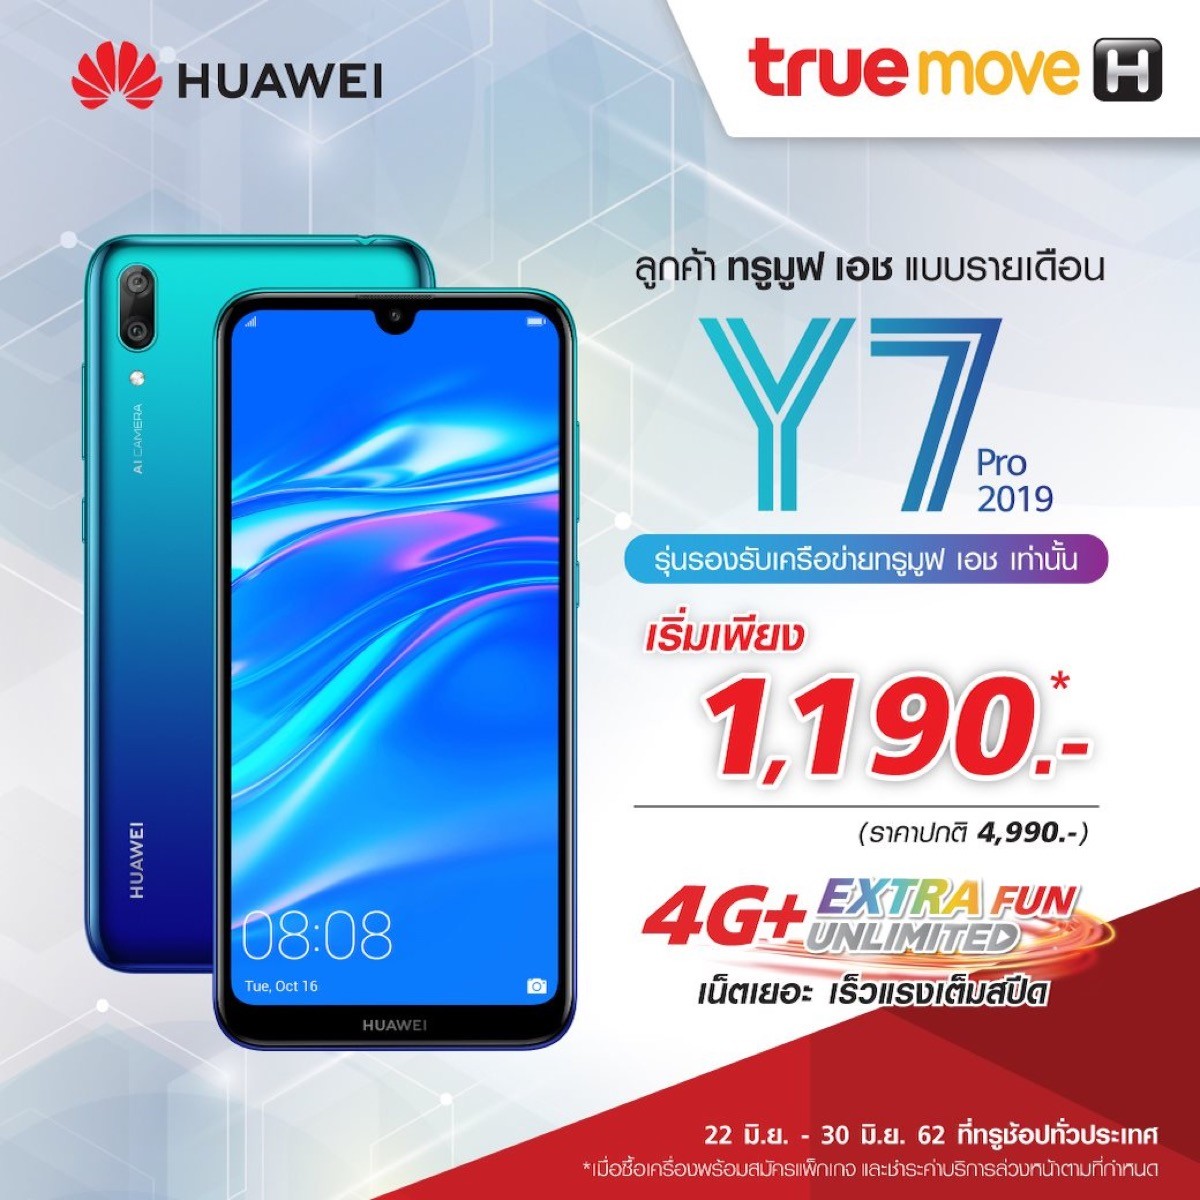 Truemove H Huawei Y7 Pro 2019, Y5 lite และ P30 Pro